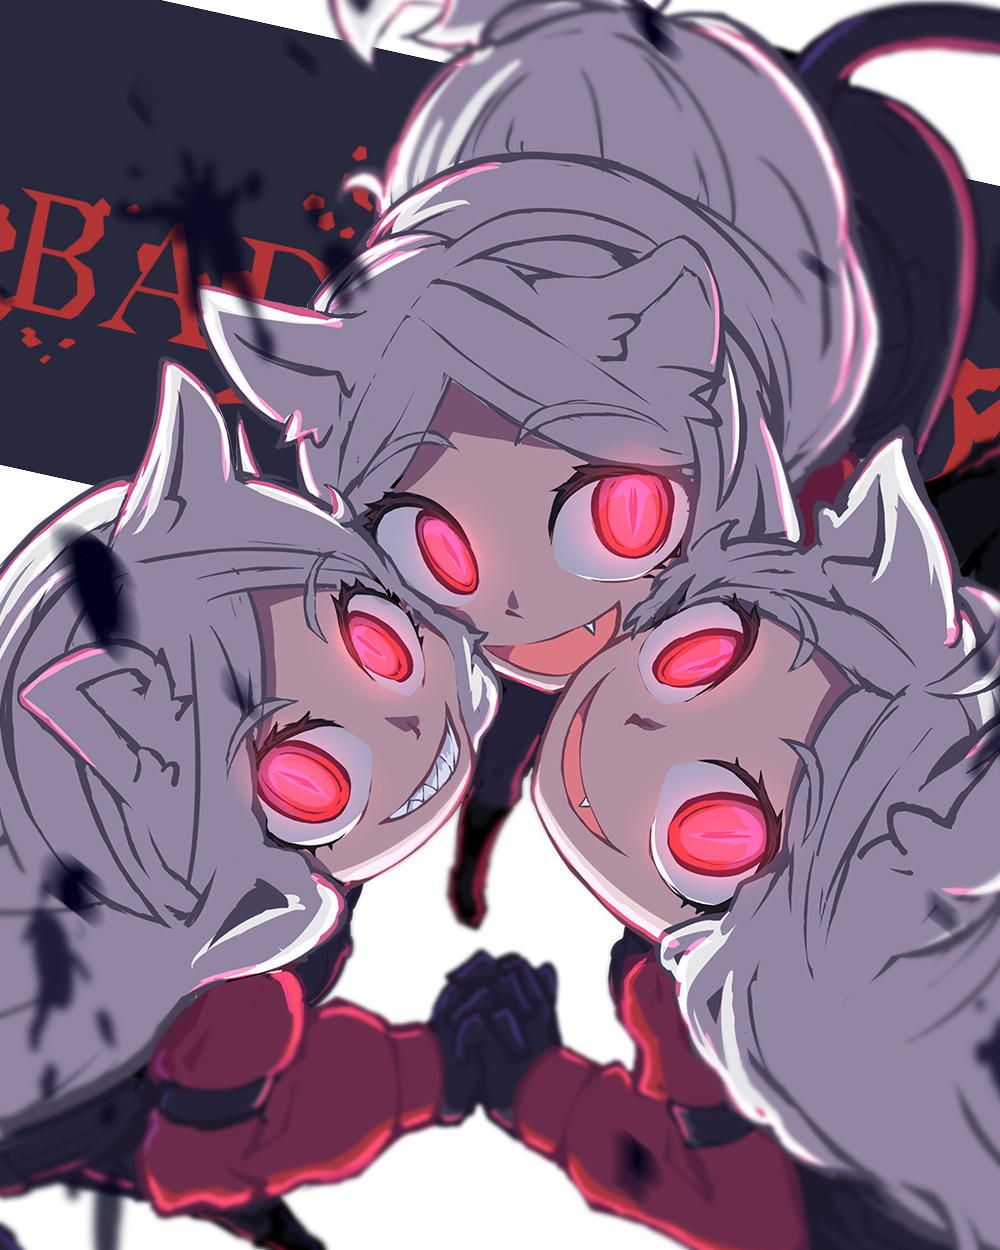 [Helltaker] erotic &amp; moe image of Cerberus of the triplet devil ★ 47